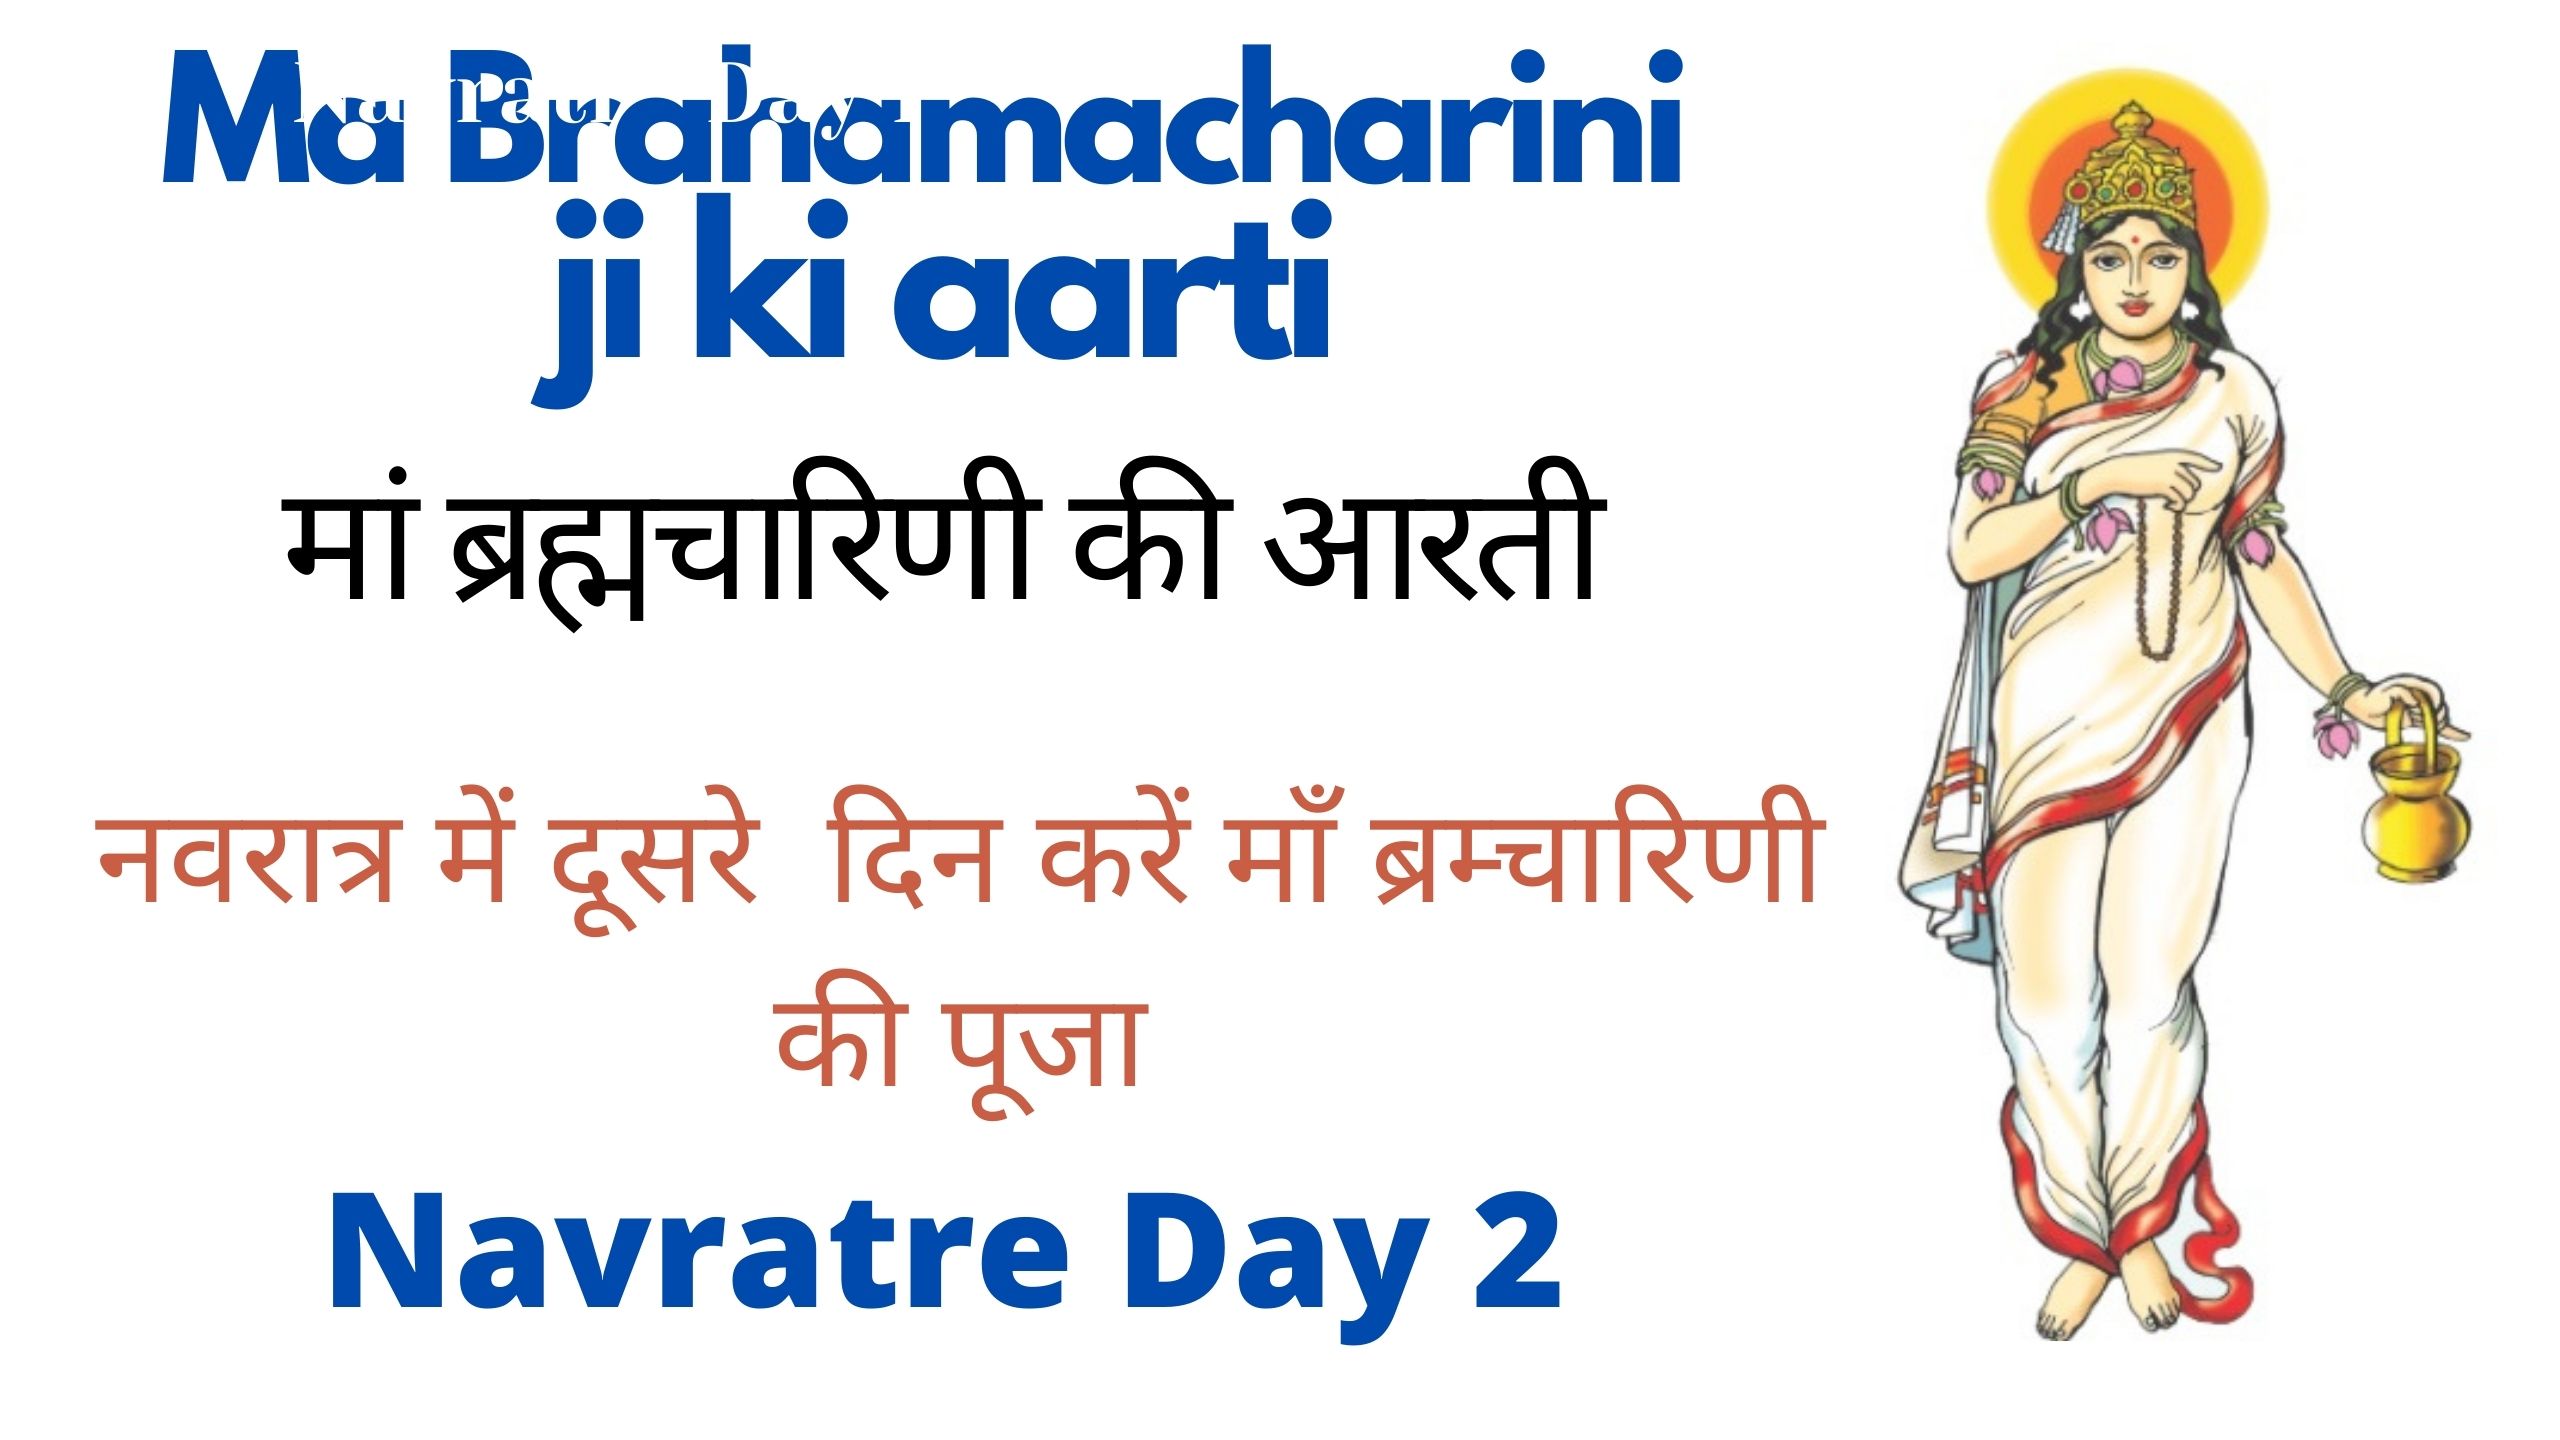 Navratri Day 2 – Ma Brahmacharini aarti – मां ब्रह्मचारिणी की आरती